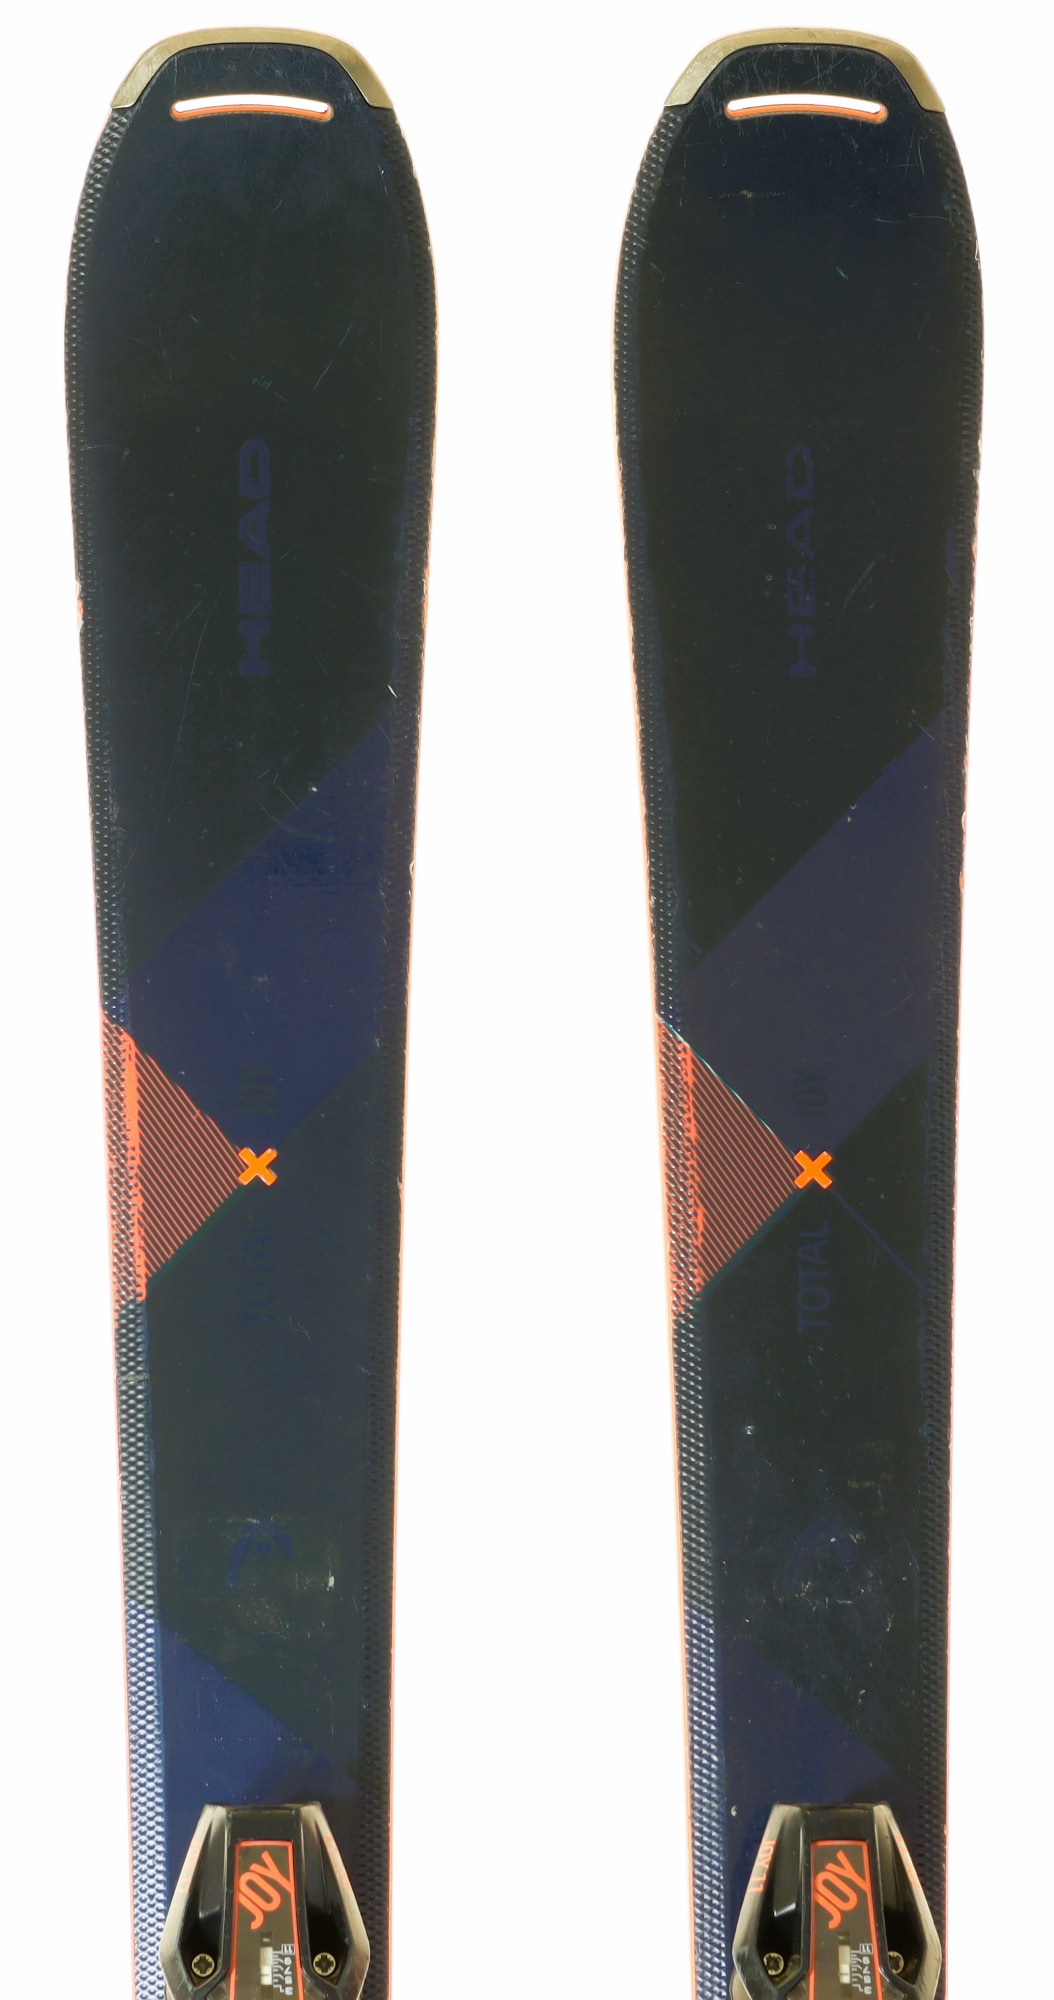 Used 2020 HEAD Total Joy Ski with Head Joy 11 bindings, Size 153 (Option 230034)